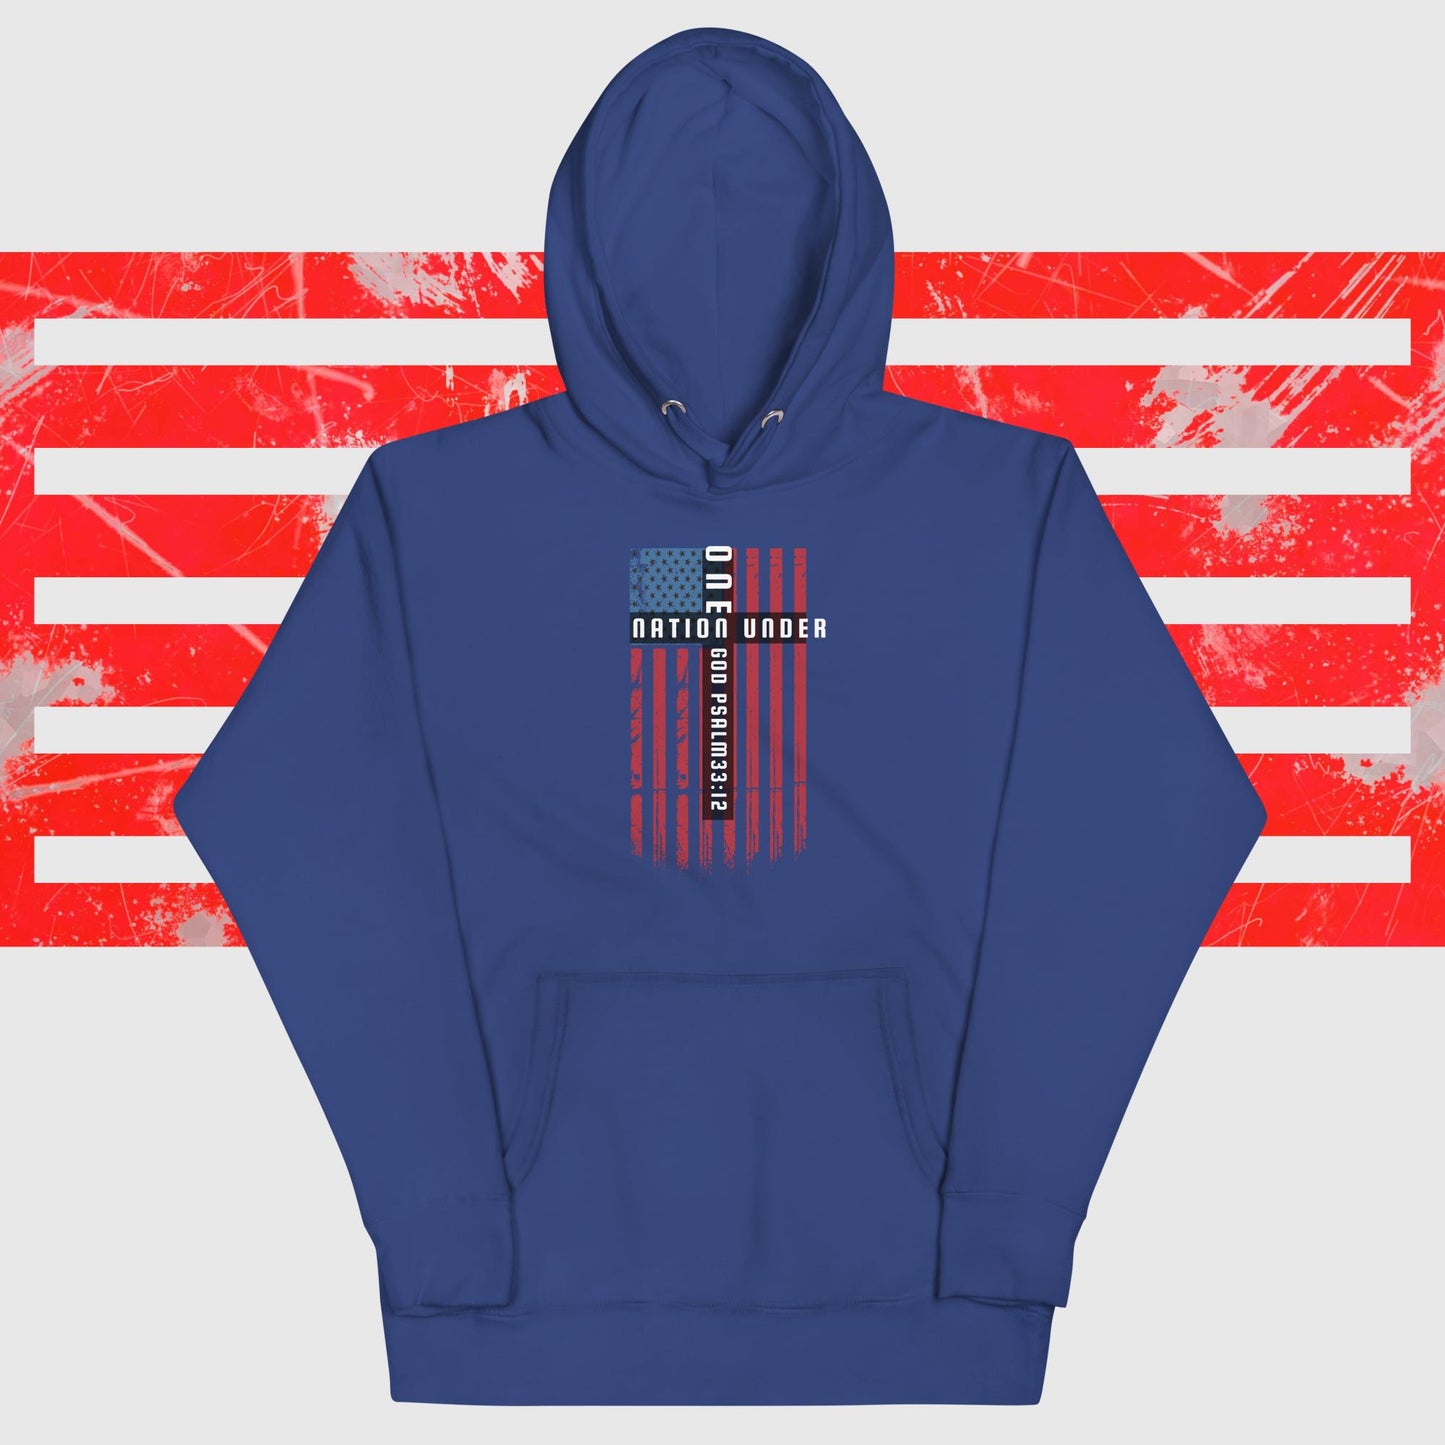 One Nation Under God Cross USA Flag hoodies